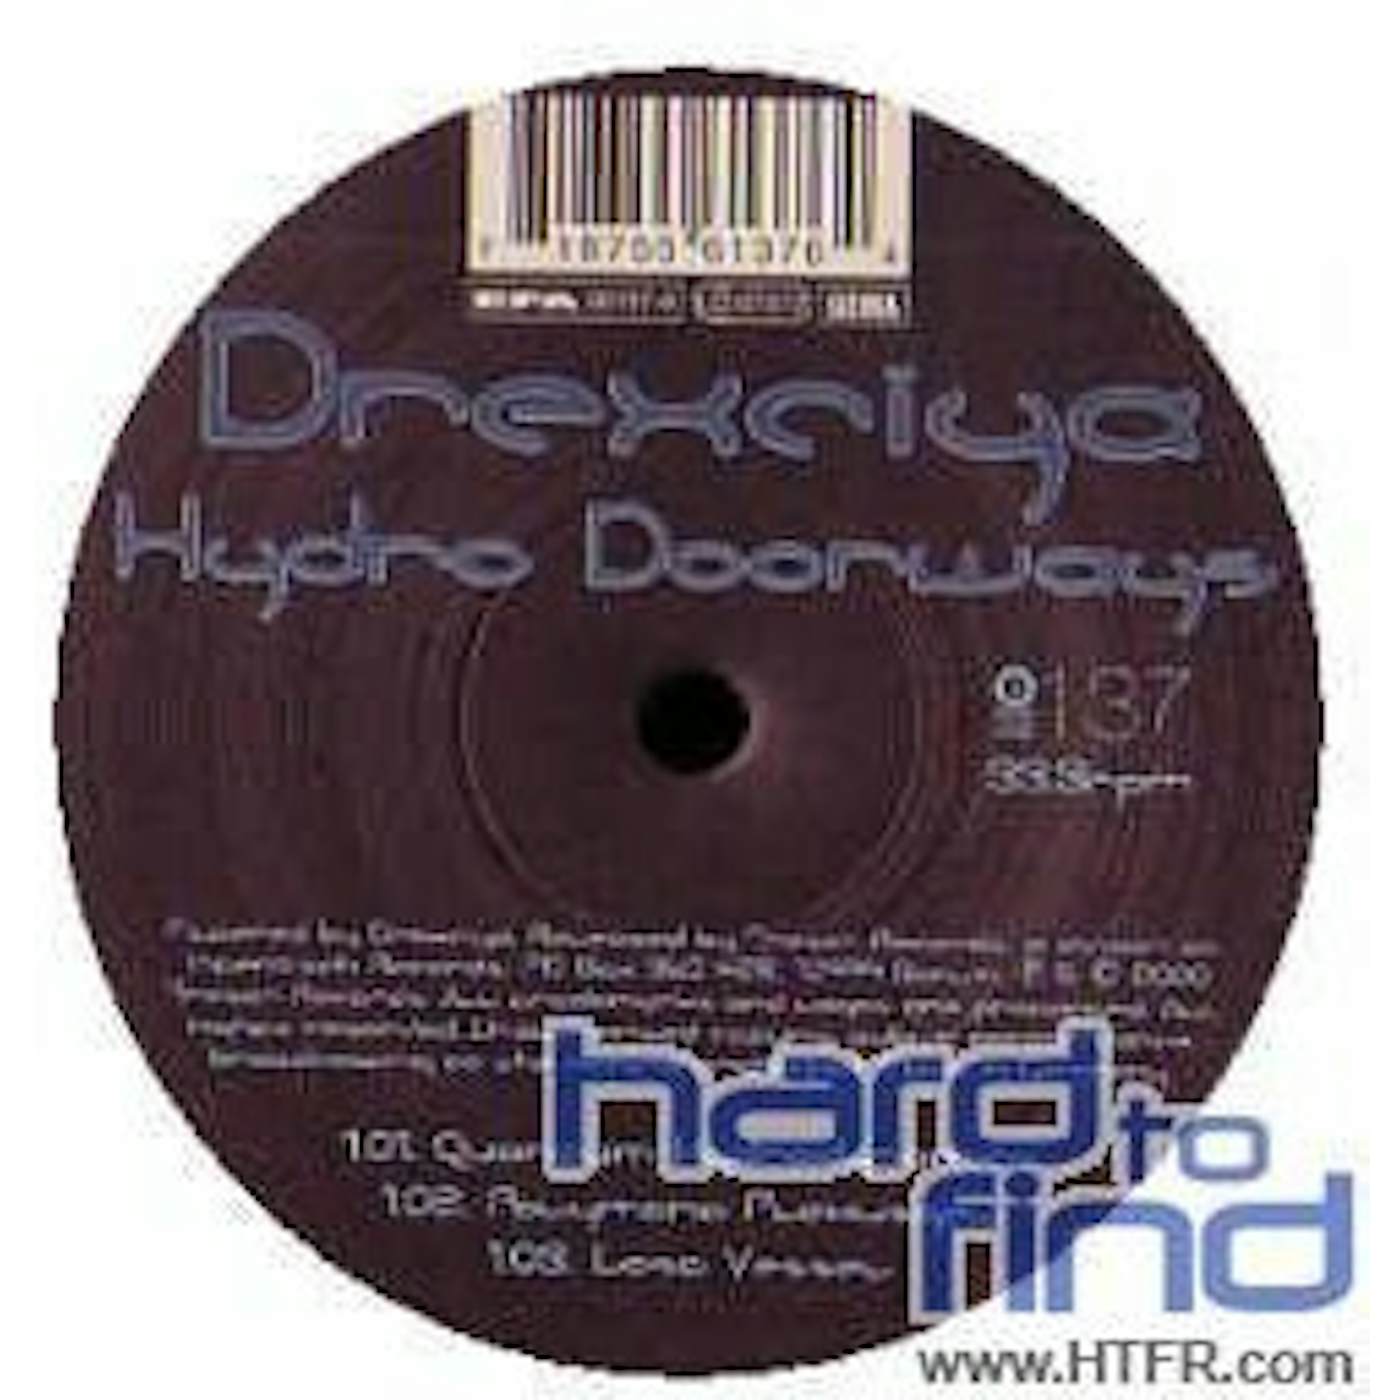 Drexciya Hydro Doorways Vinyl Record